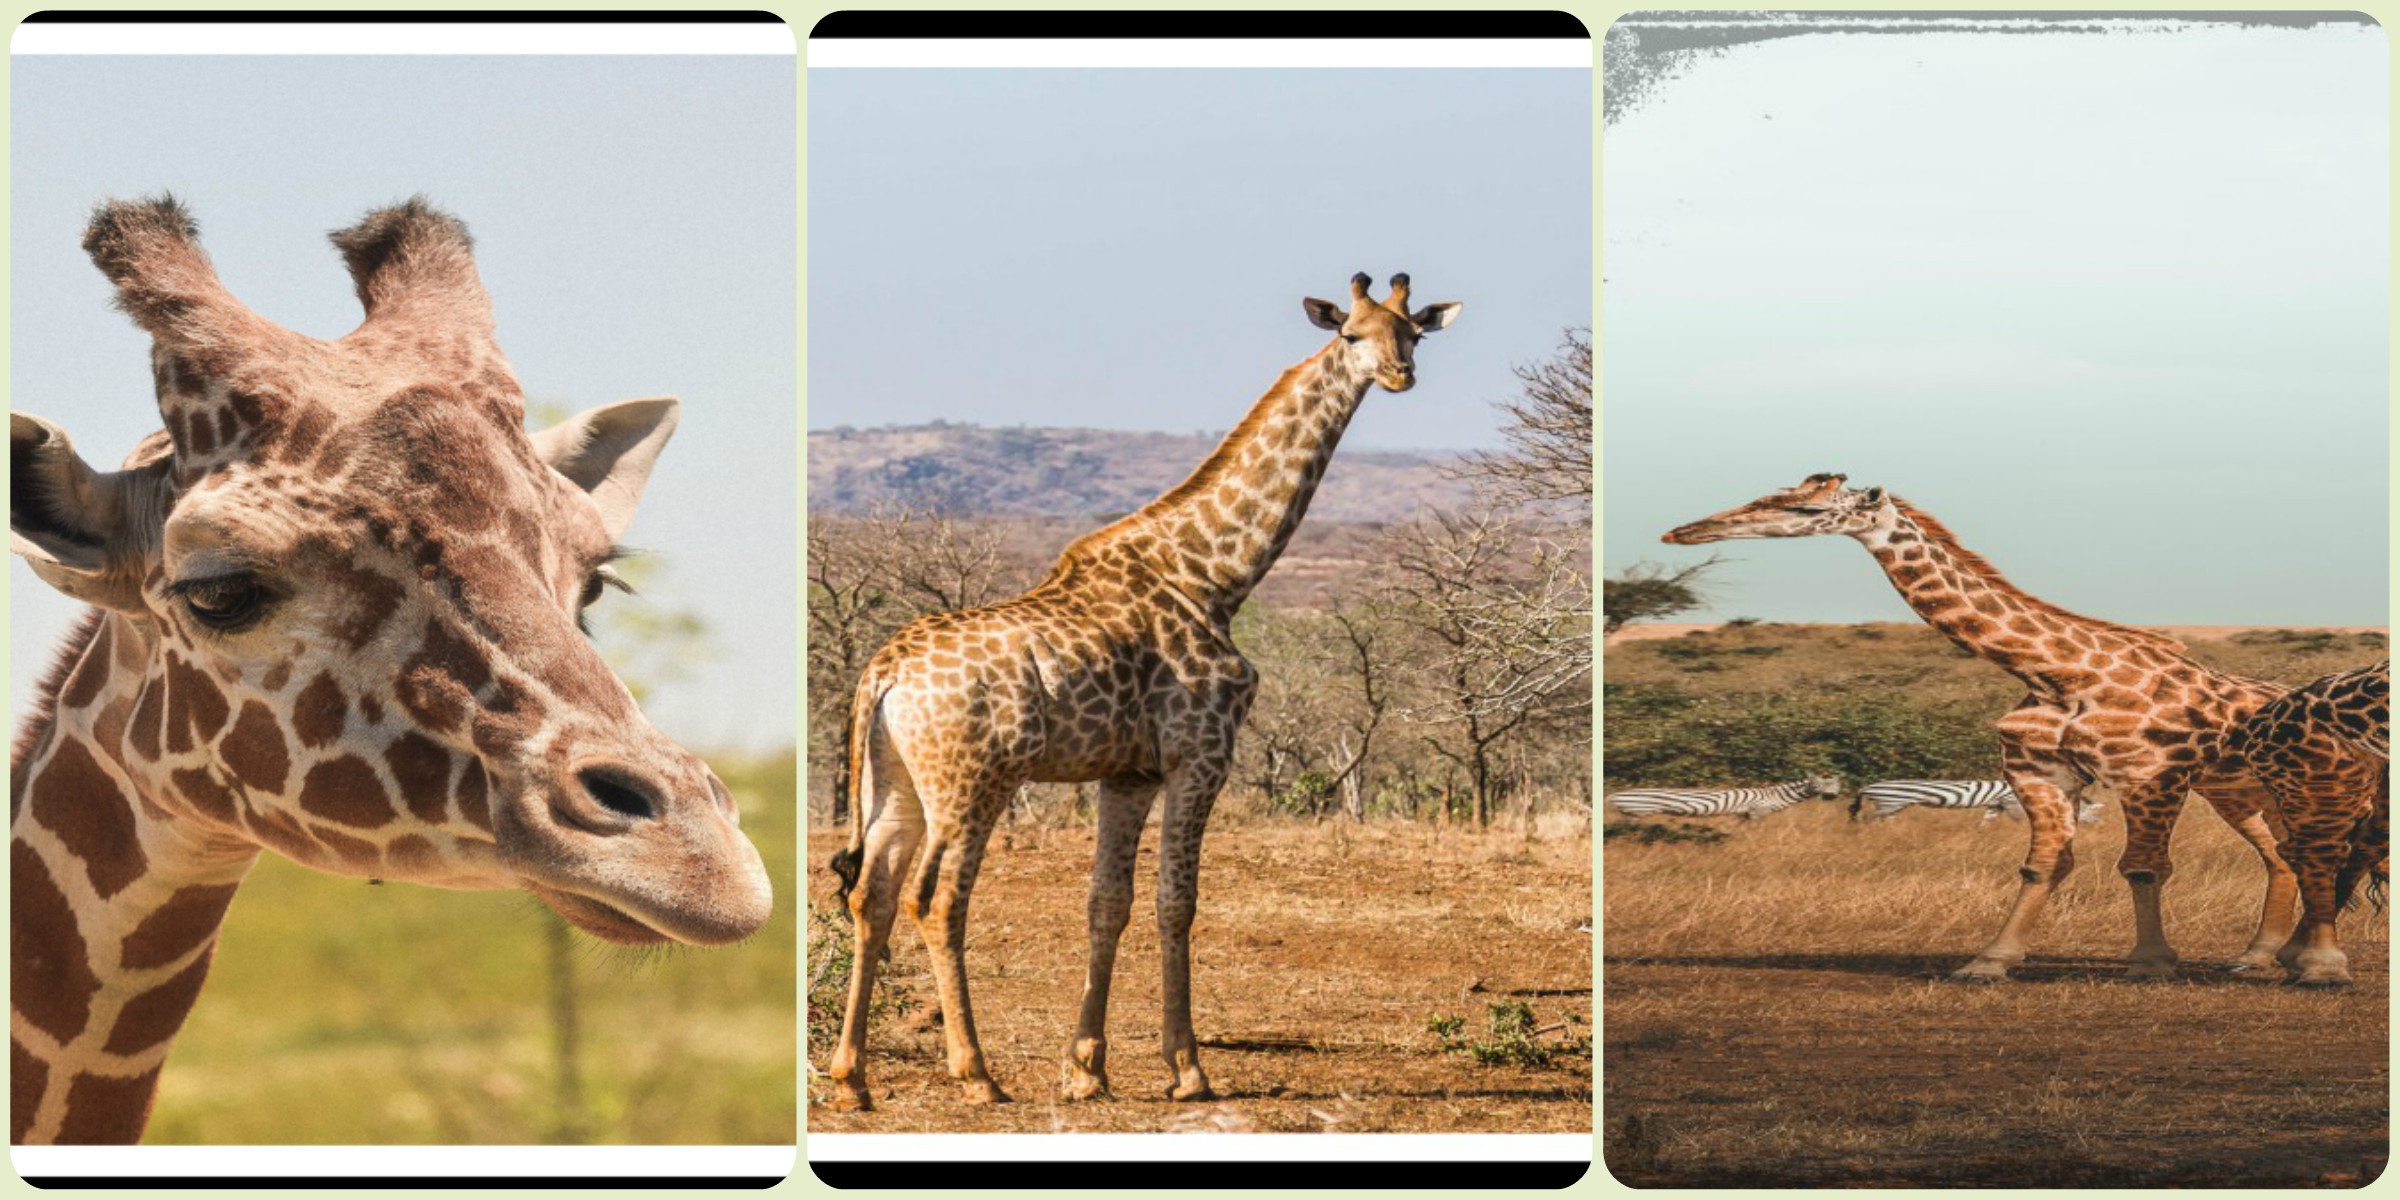 Giraffe : The Tallest Animal In The World - Cheche Winnie